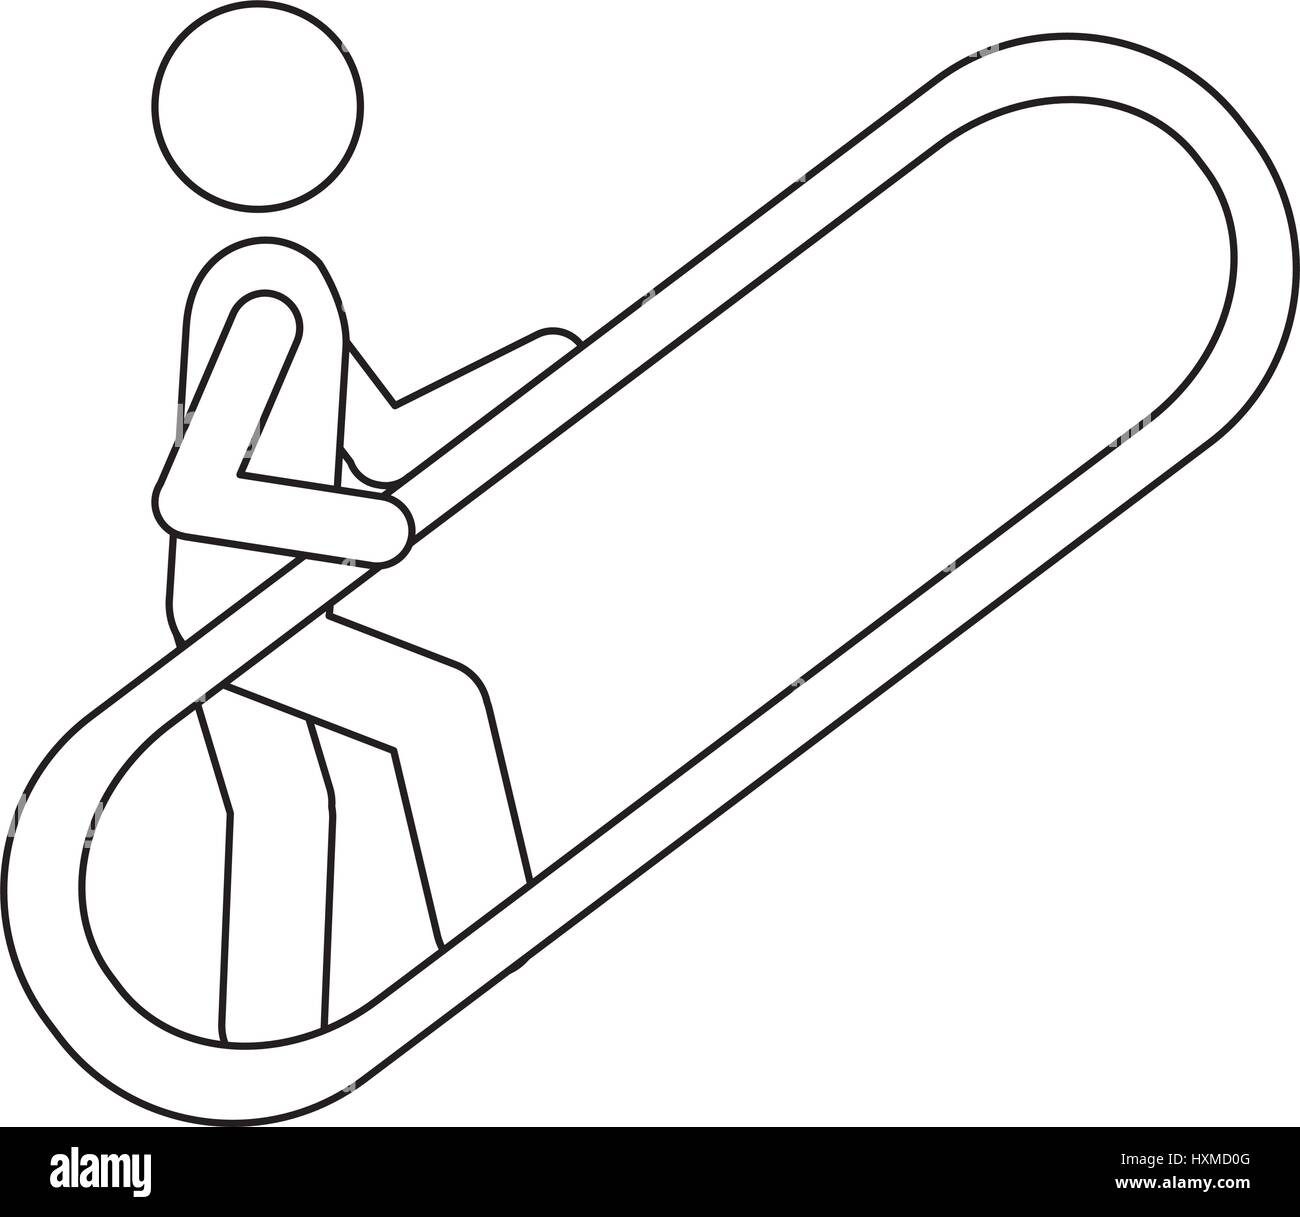 figure person up the escalator icon Stock Vector